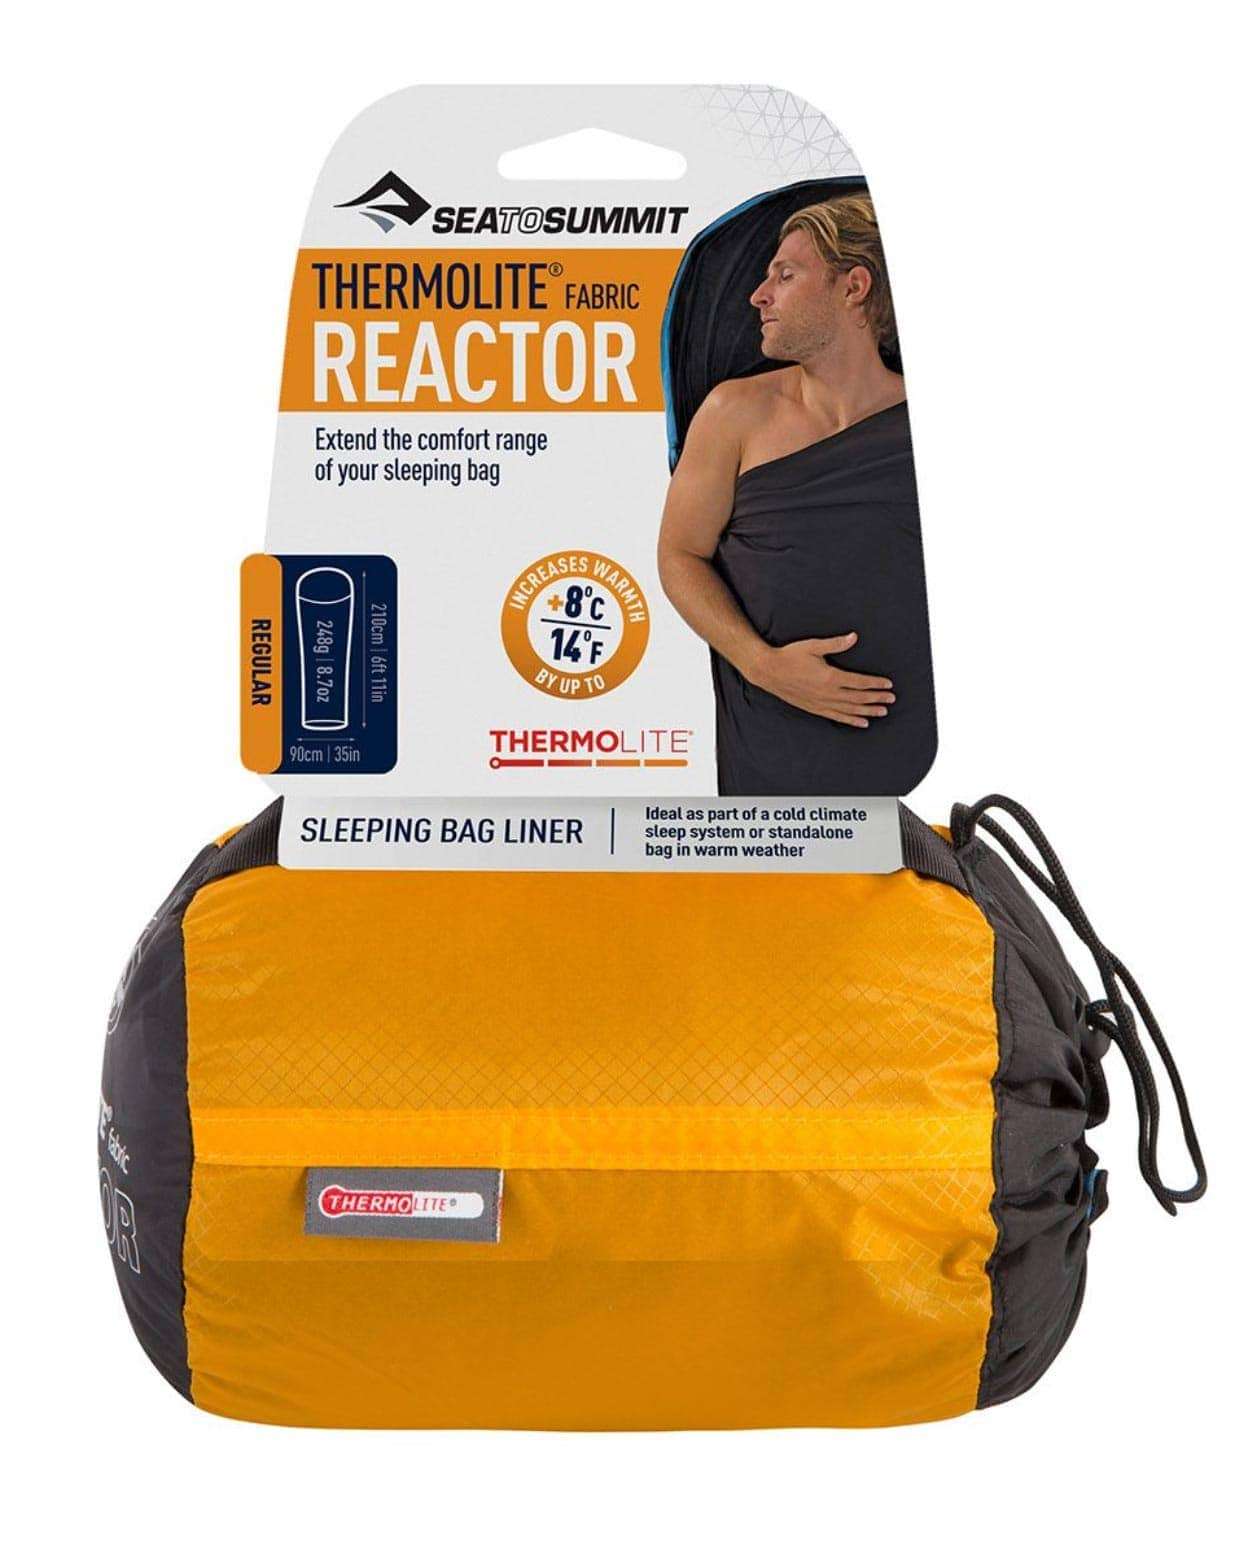 Sea To Summit Reactor Thermolite Sleeping Bag Liner